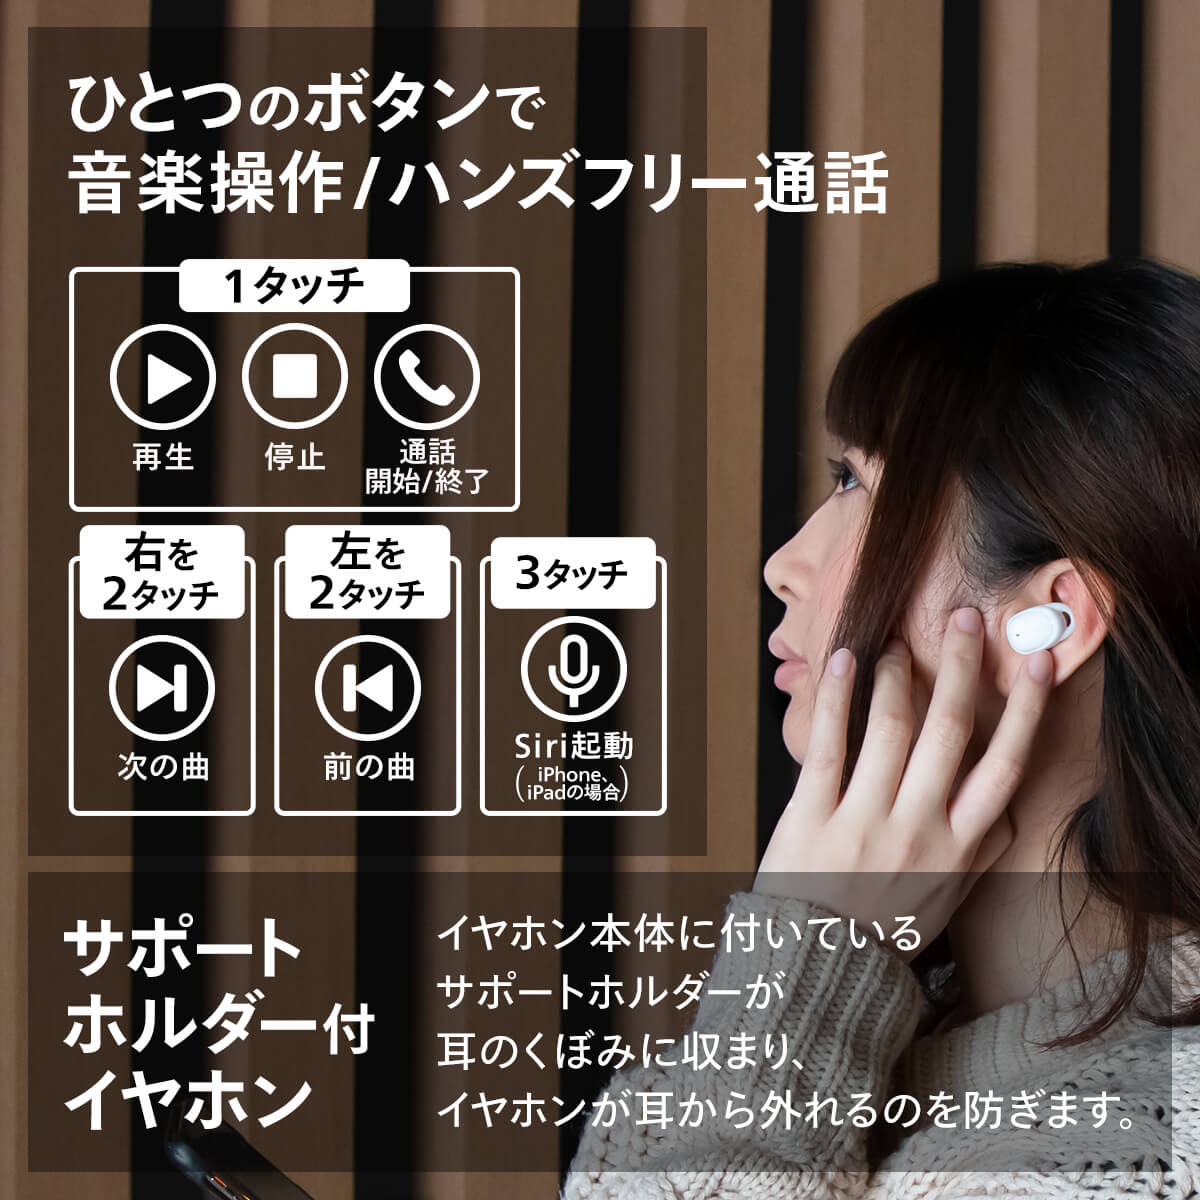 【販売終了】cheero Wireless Earphones powered by Qualcomm®aptX™ audio